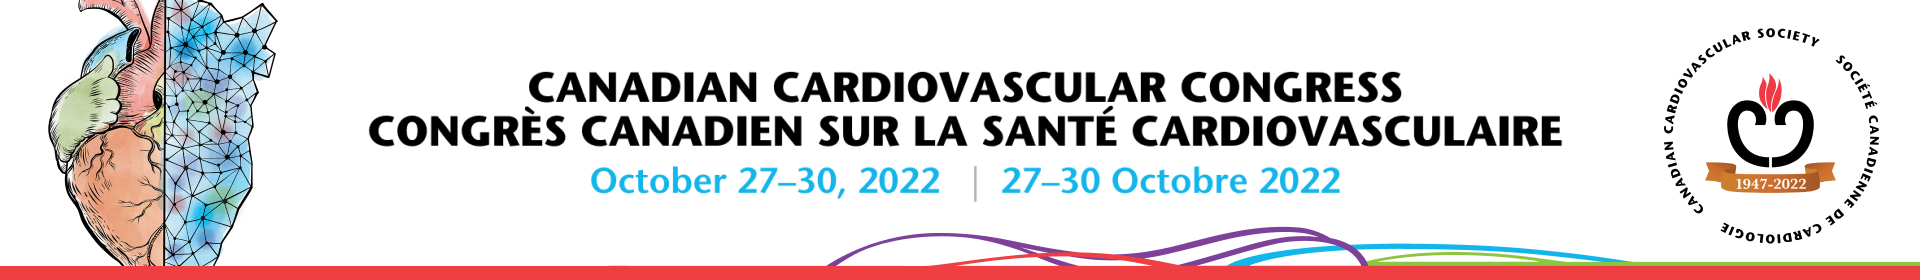 2022 Canadian Cardiovascular Congress Event Banner